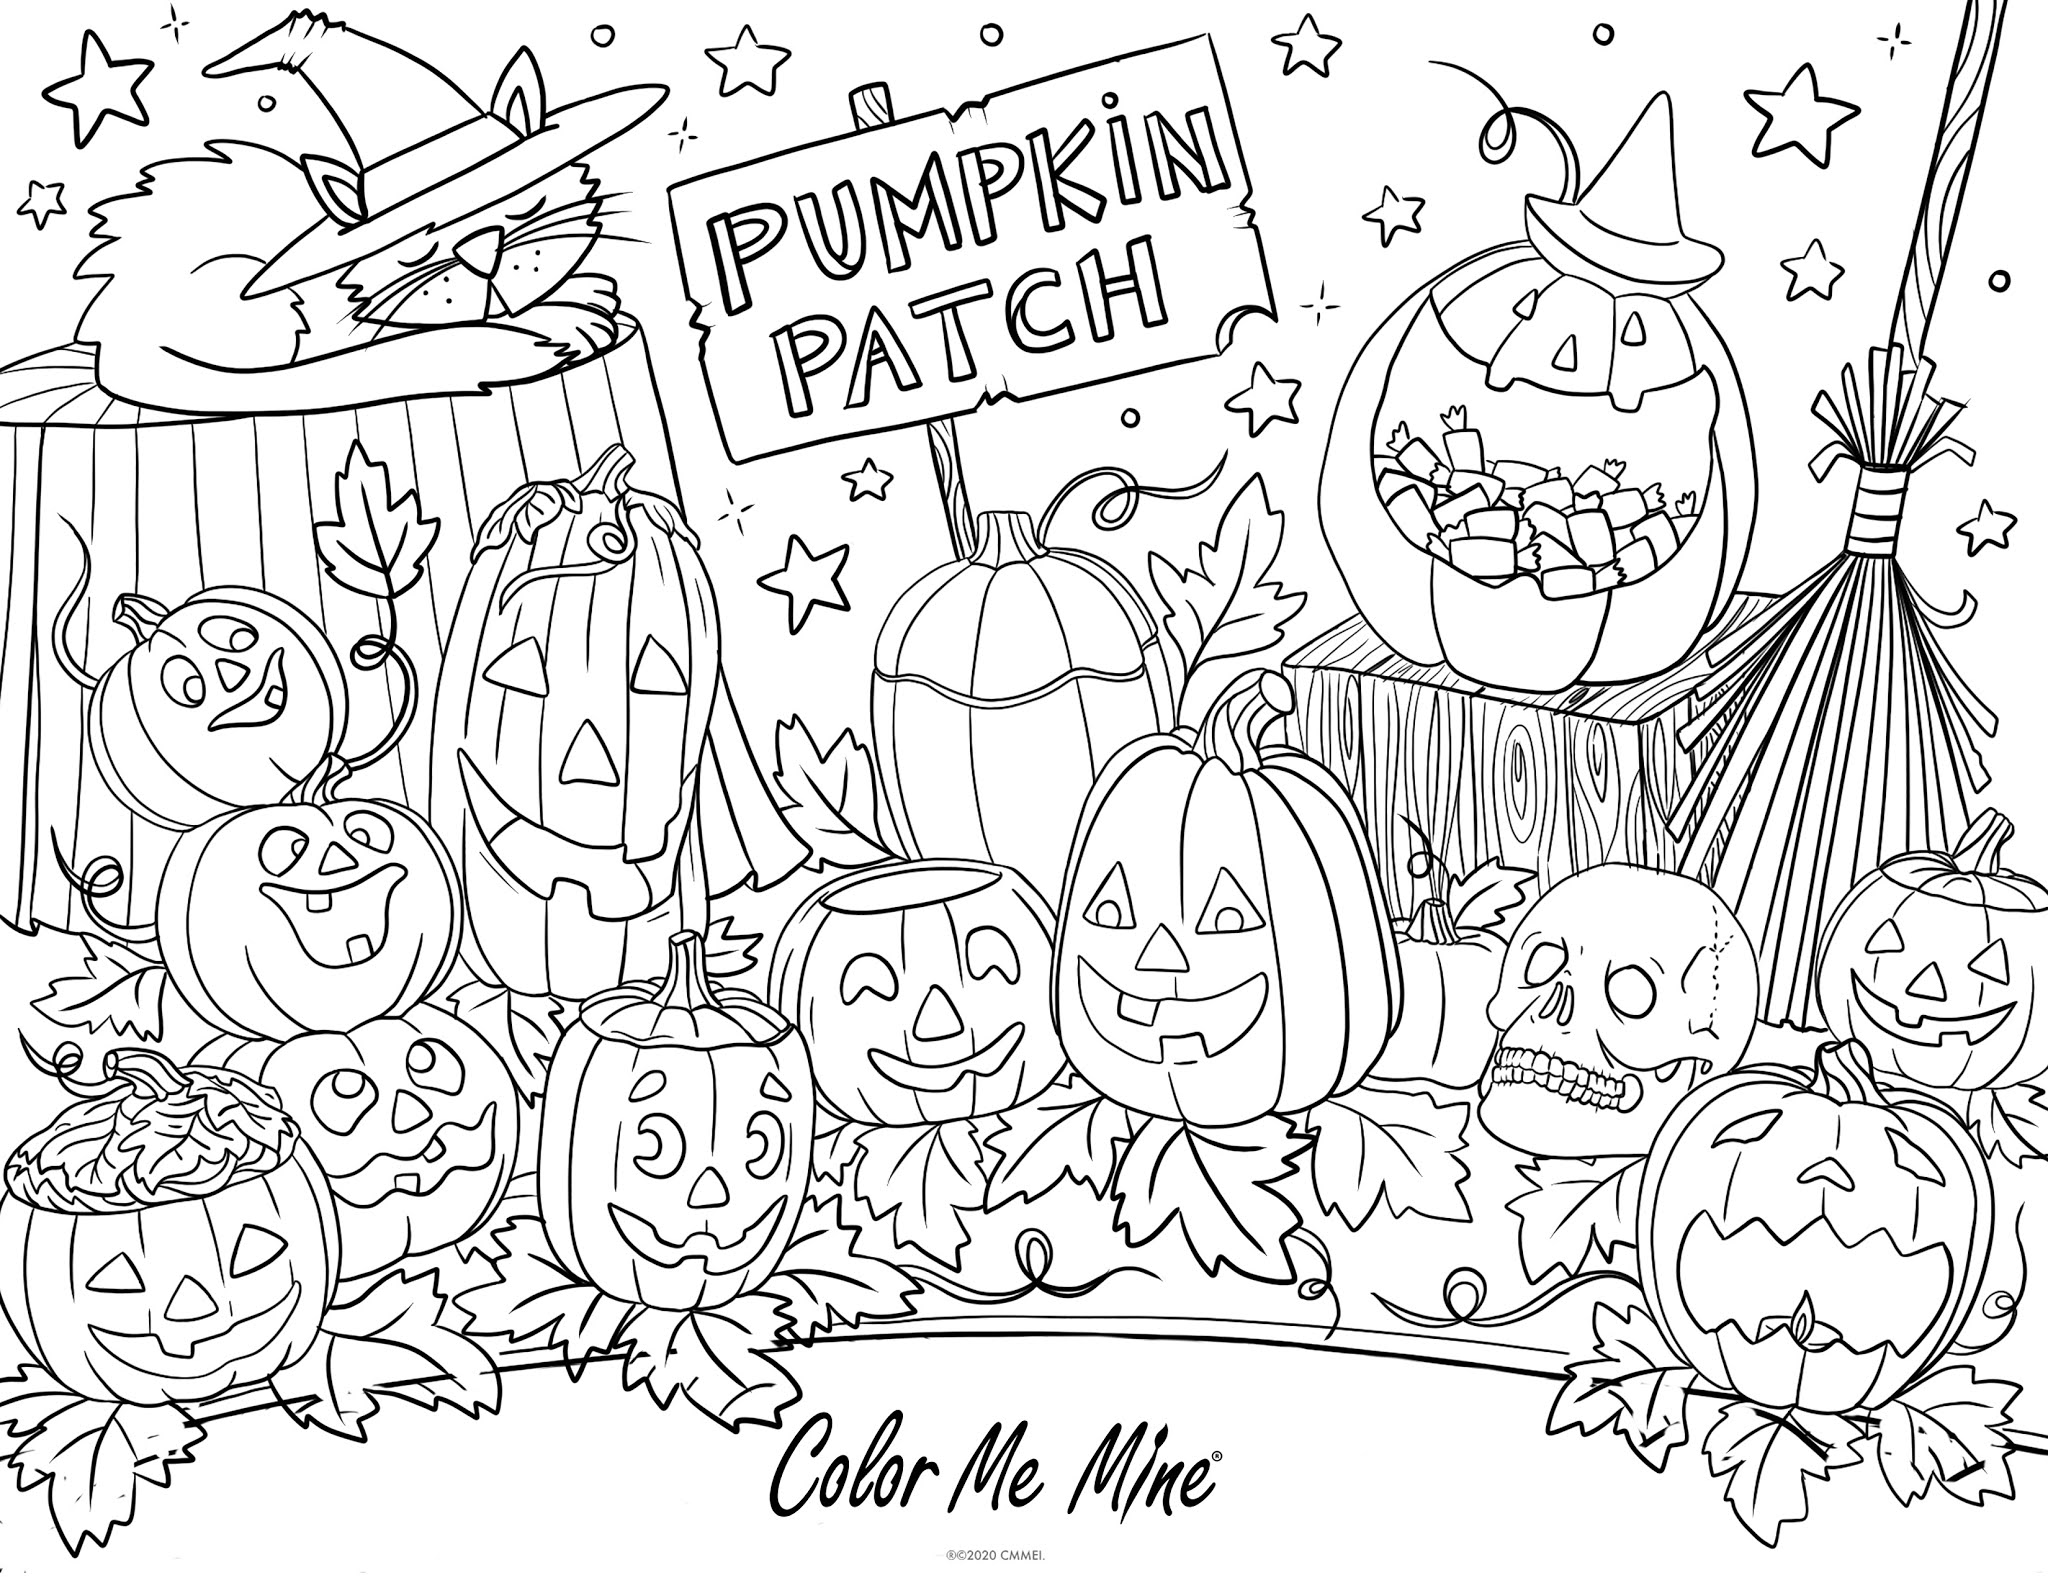 Pumpkin Patch Coloring Sheet - Highland Village